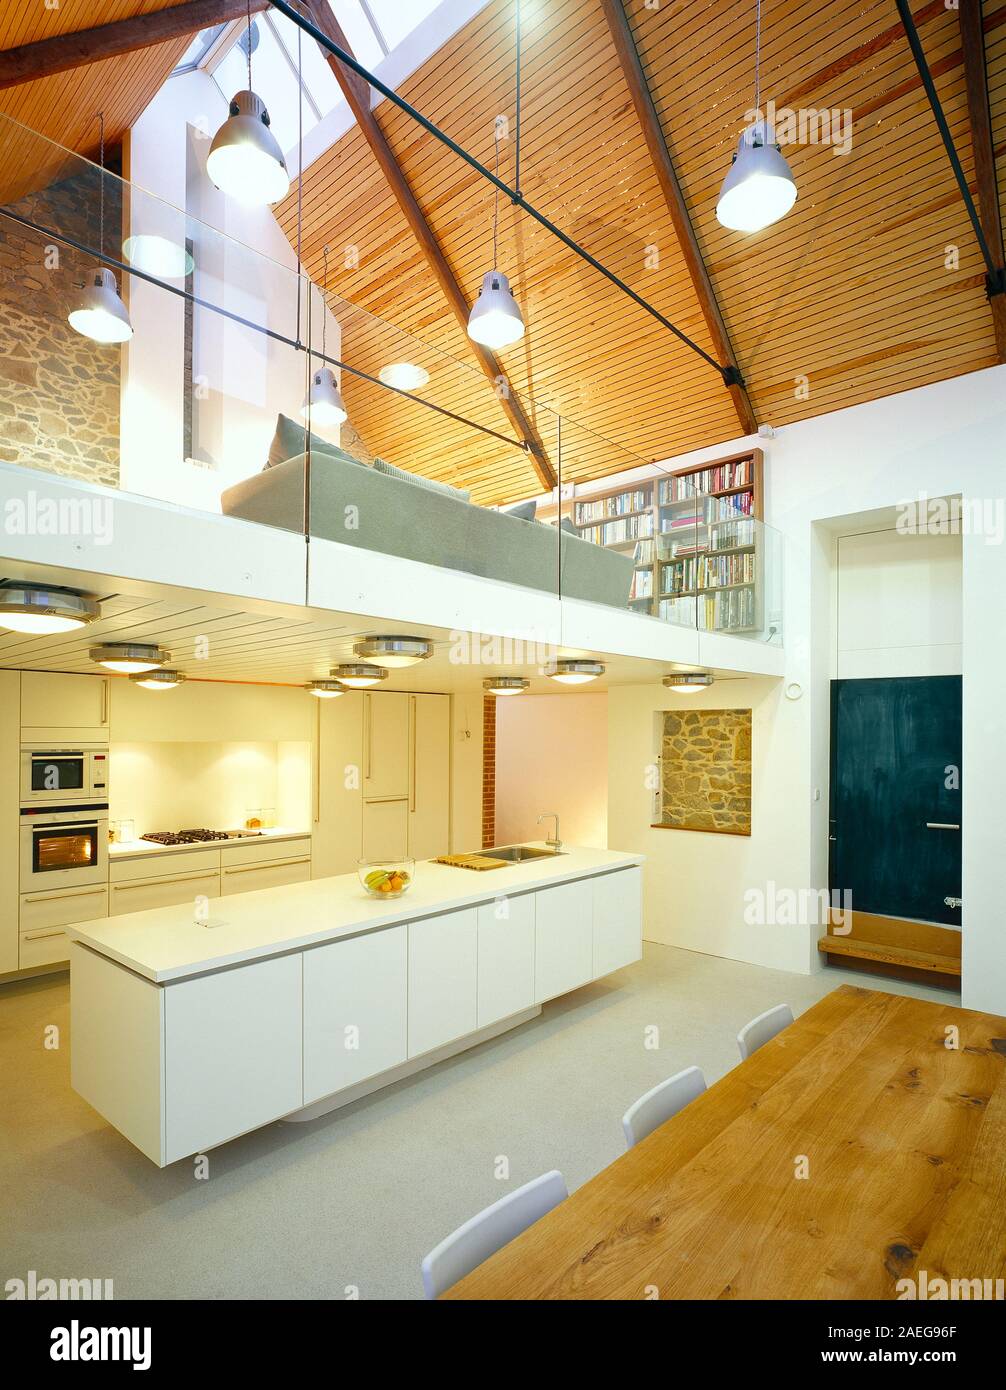 Architecture Modern Residential Interior With Kitchen Diner